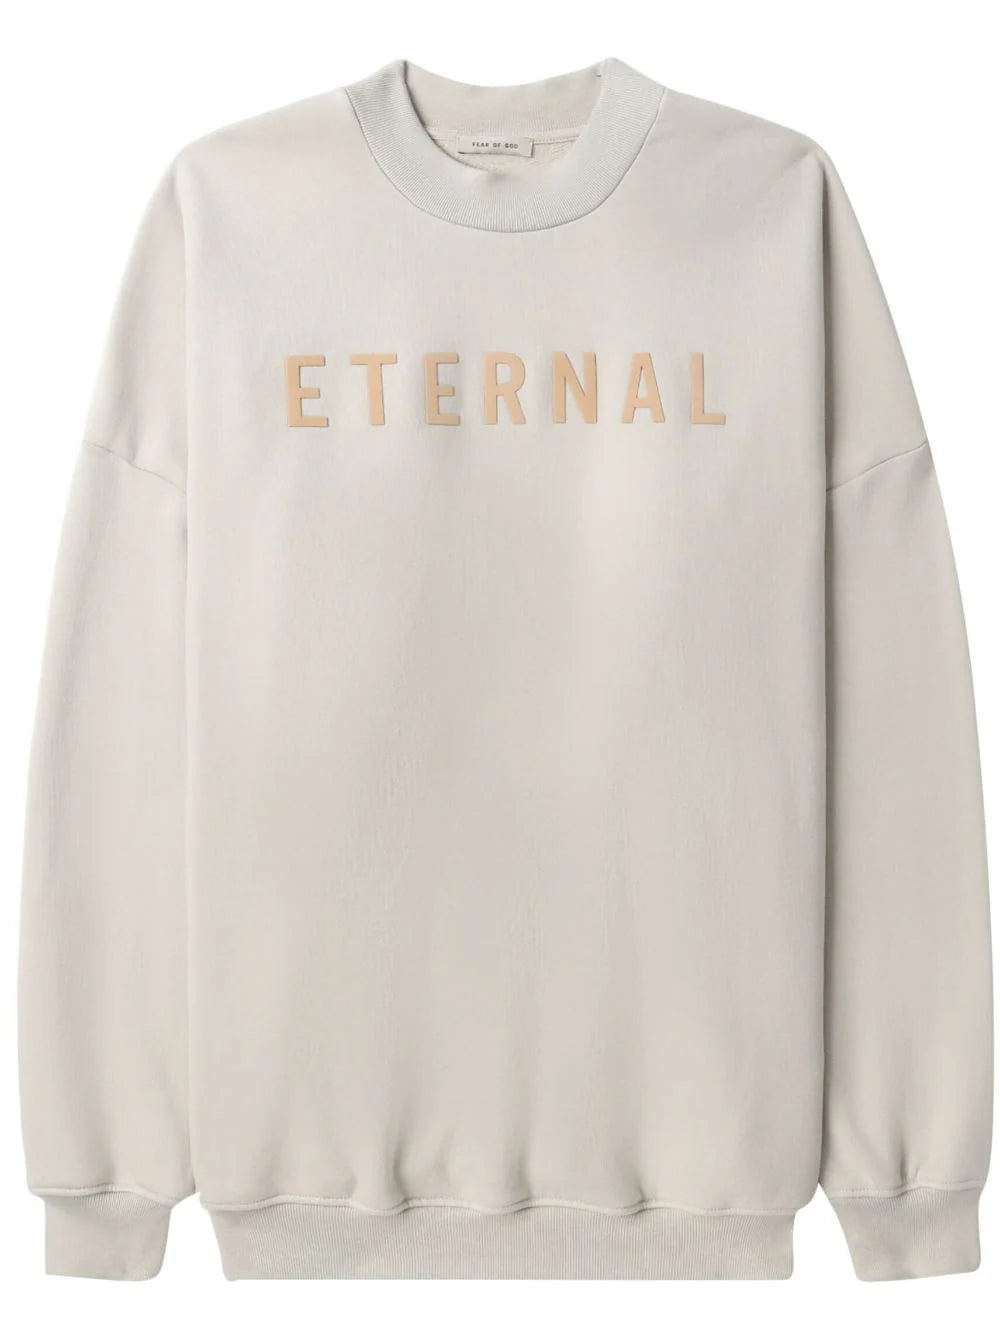 FEAR OF GOD Eternal Fleece Crewneck Sweatshirt Cement - MAISONDEFASHION.COM